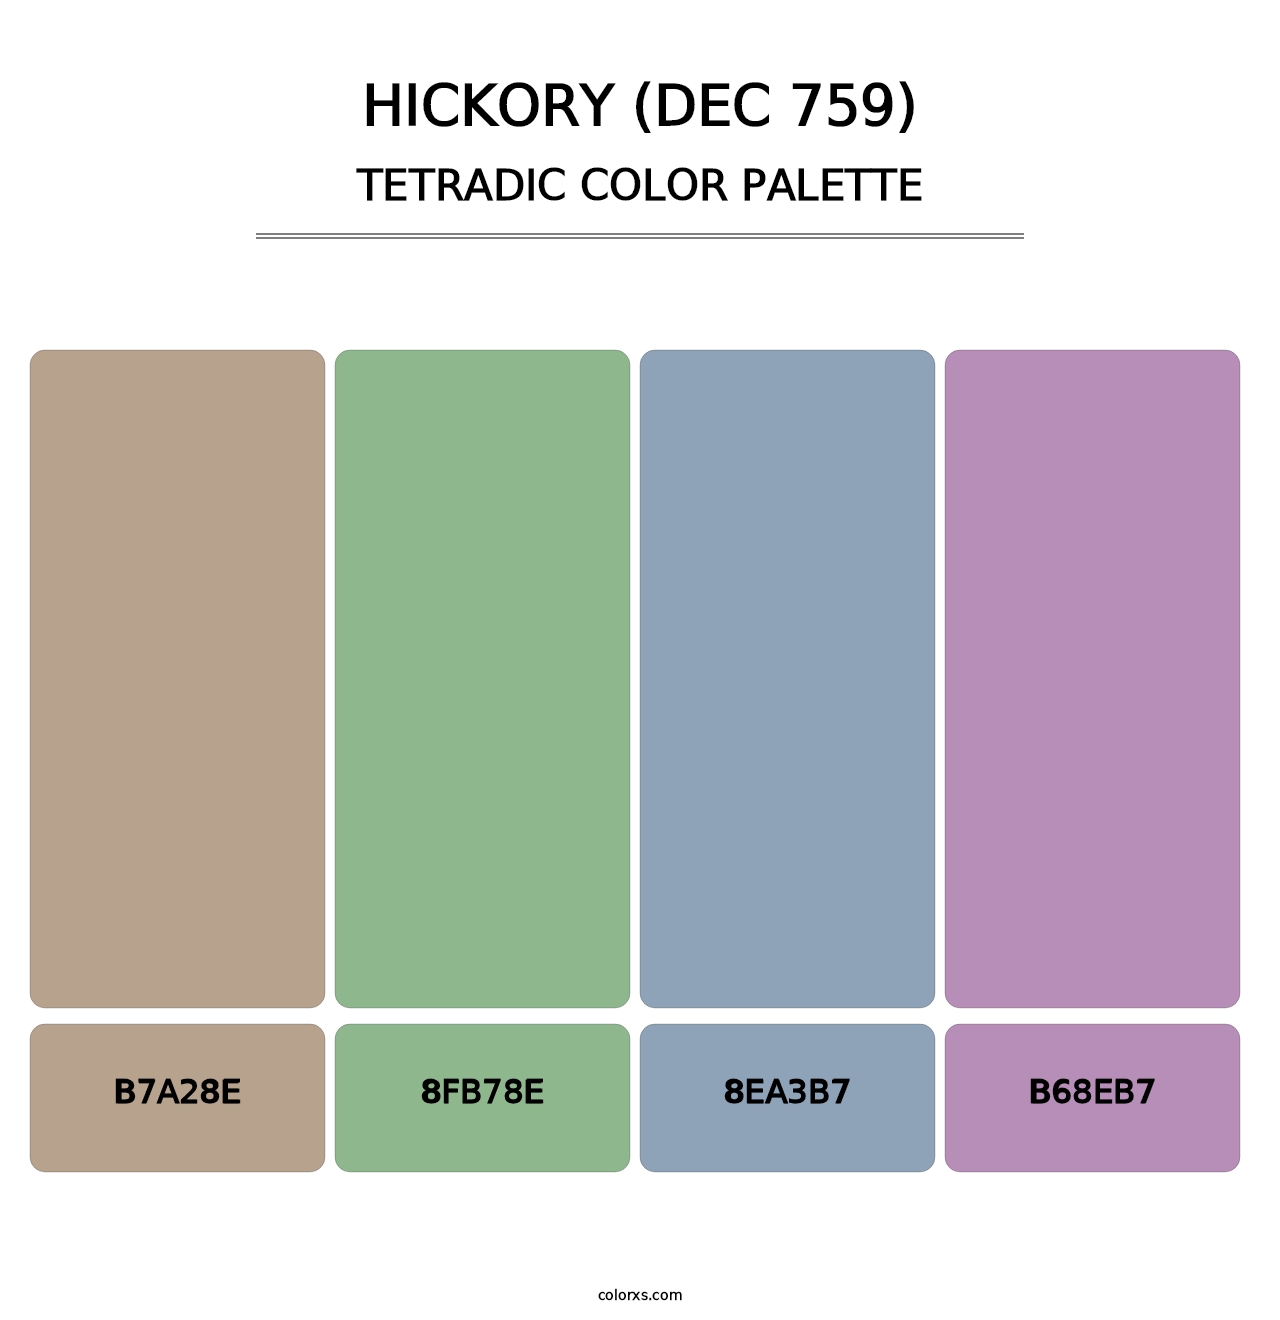 Hickory (DEC 759) - Tetradic Color Palette